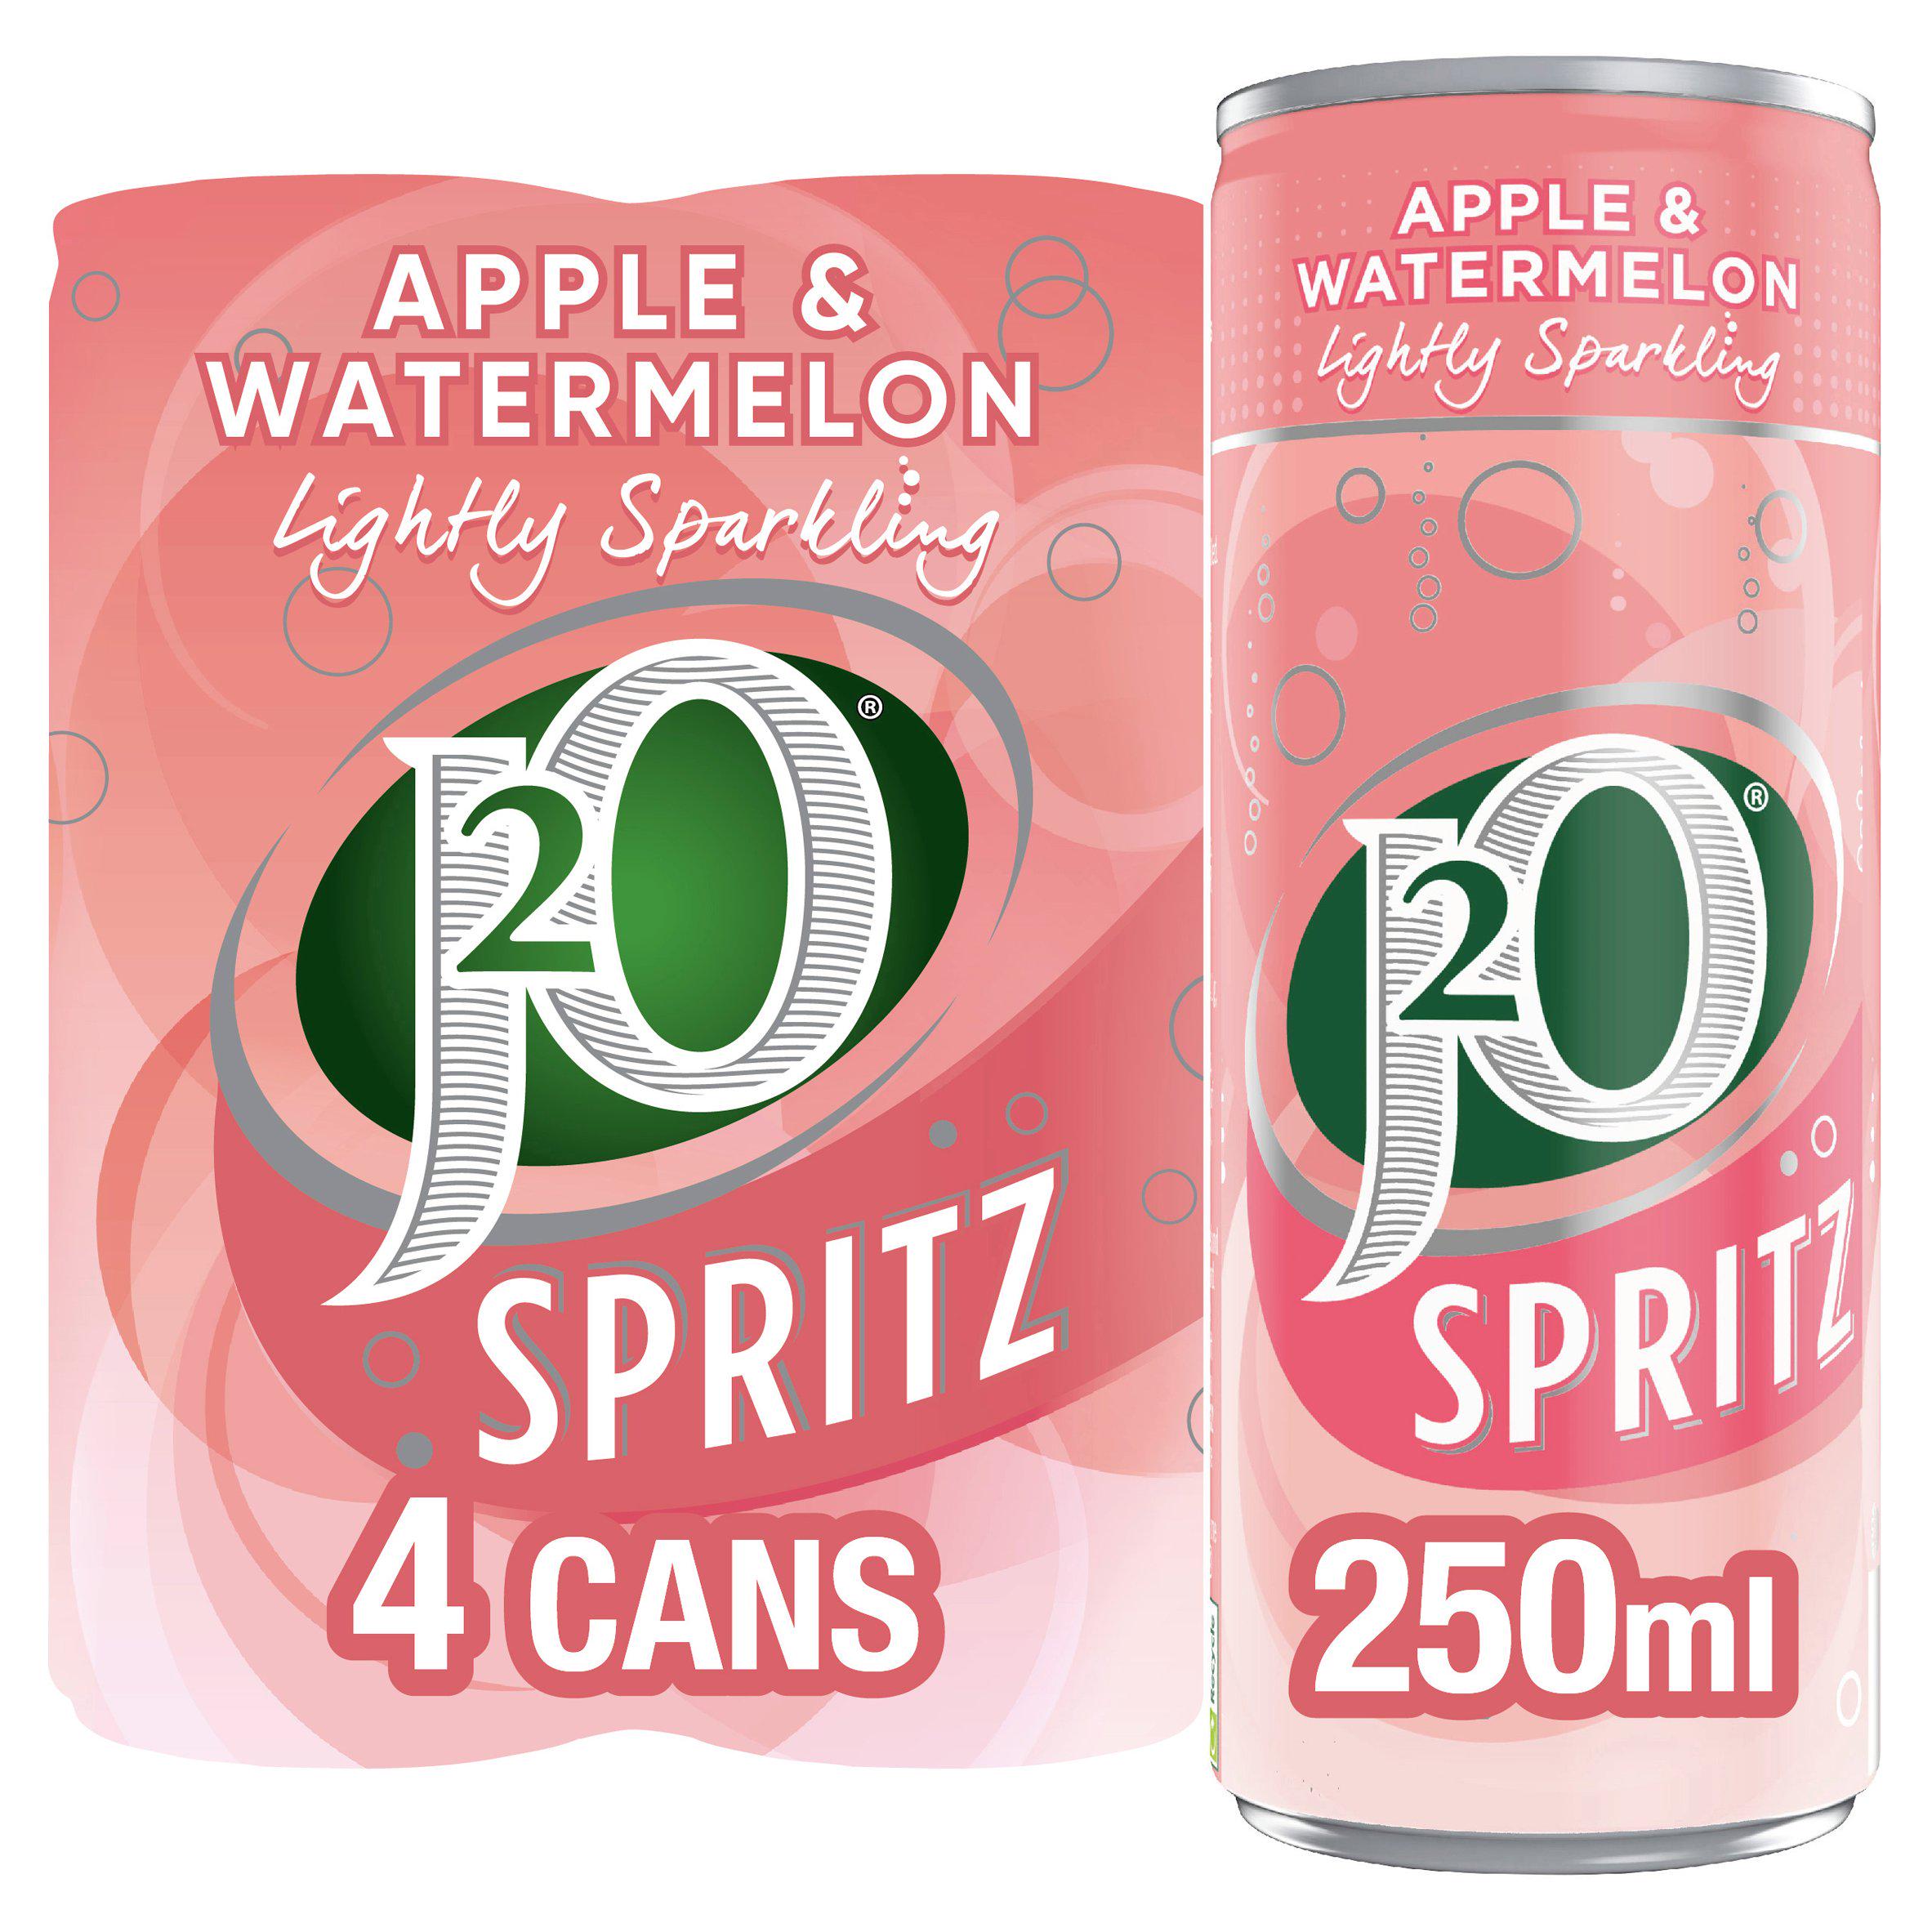 J2O Spritz Sparkling Apple & Watermelon Cans 4x250ml Adult soft drinks Sainsburys   